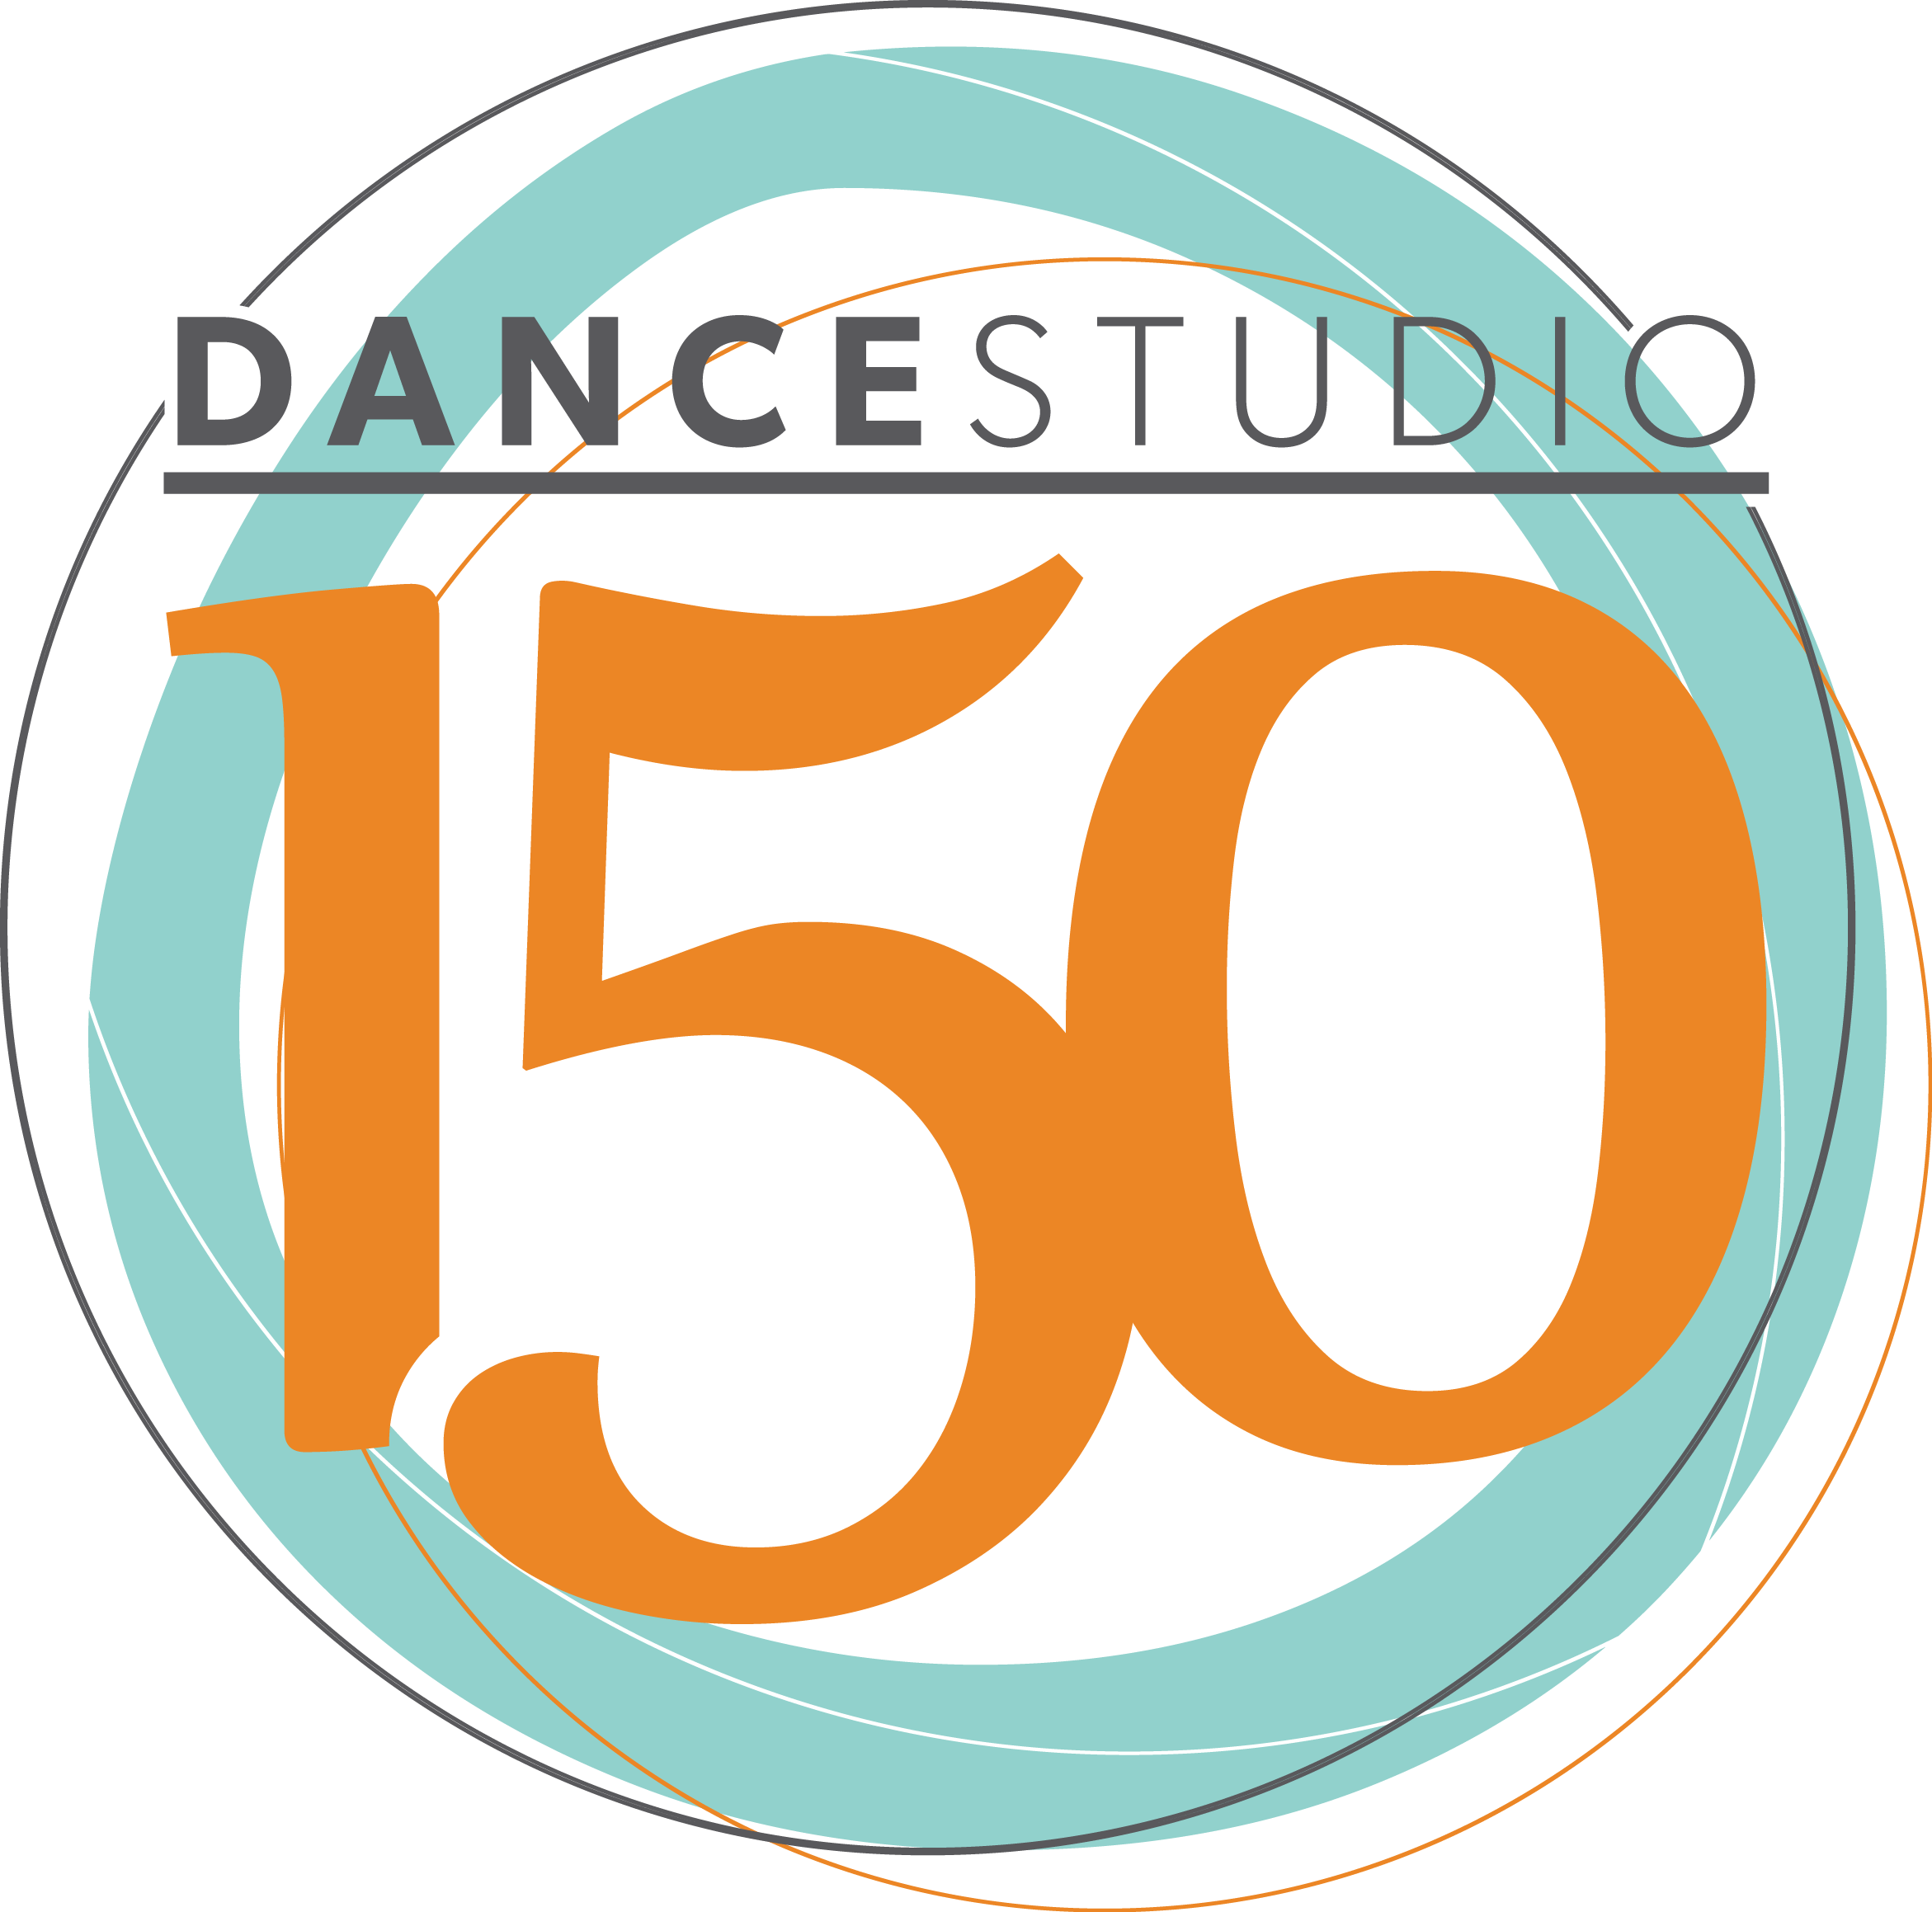 Dance Studio 150 logo.png